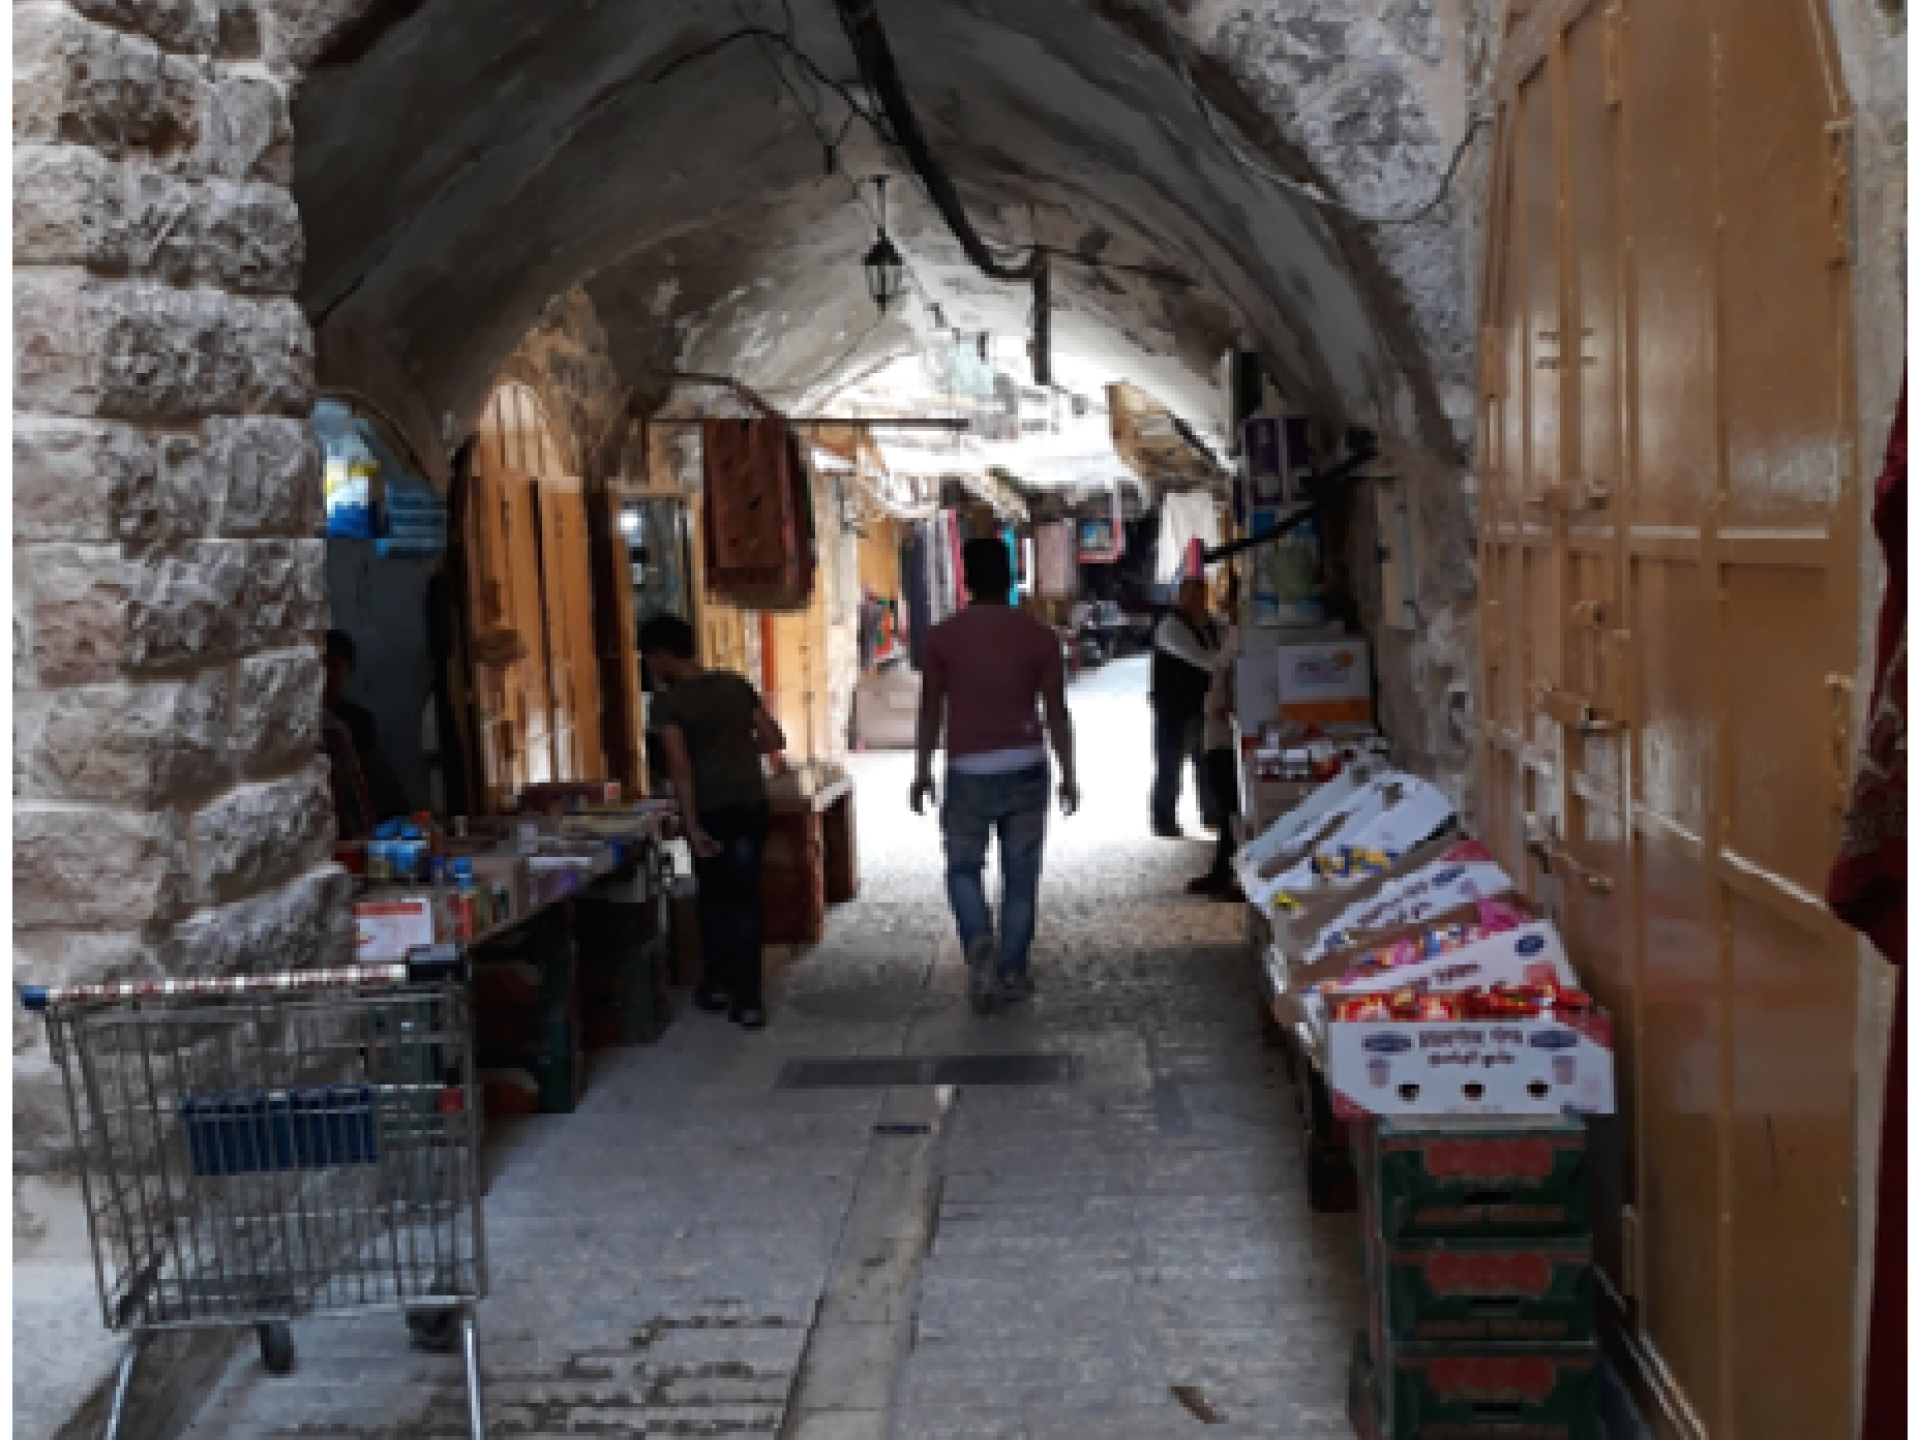 The market in Hebron